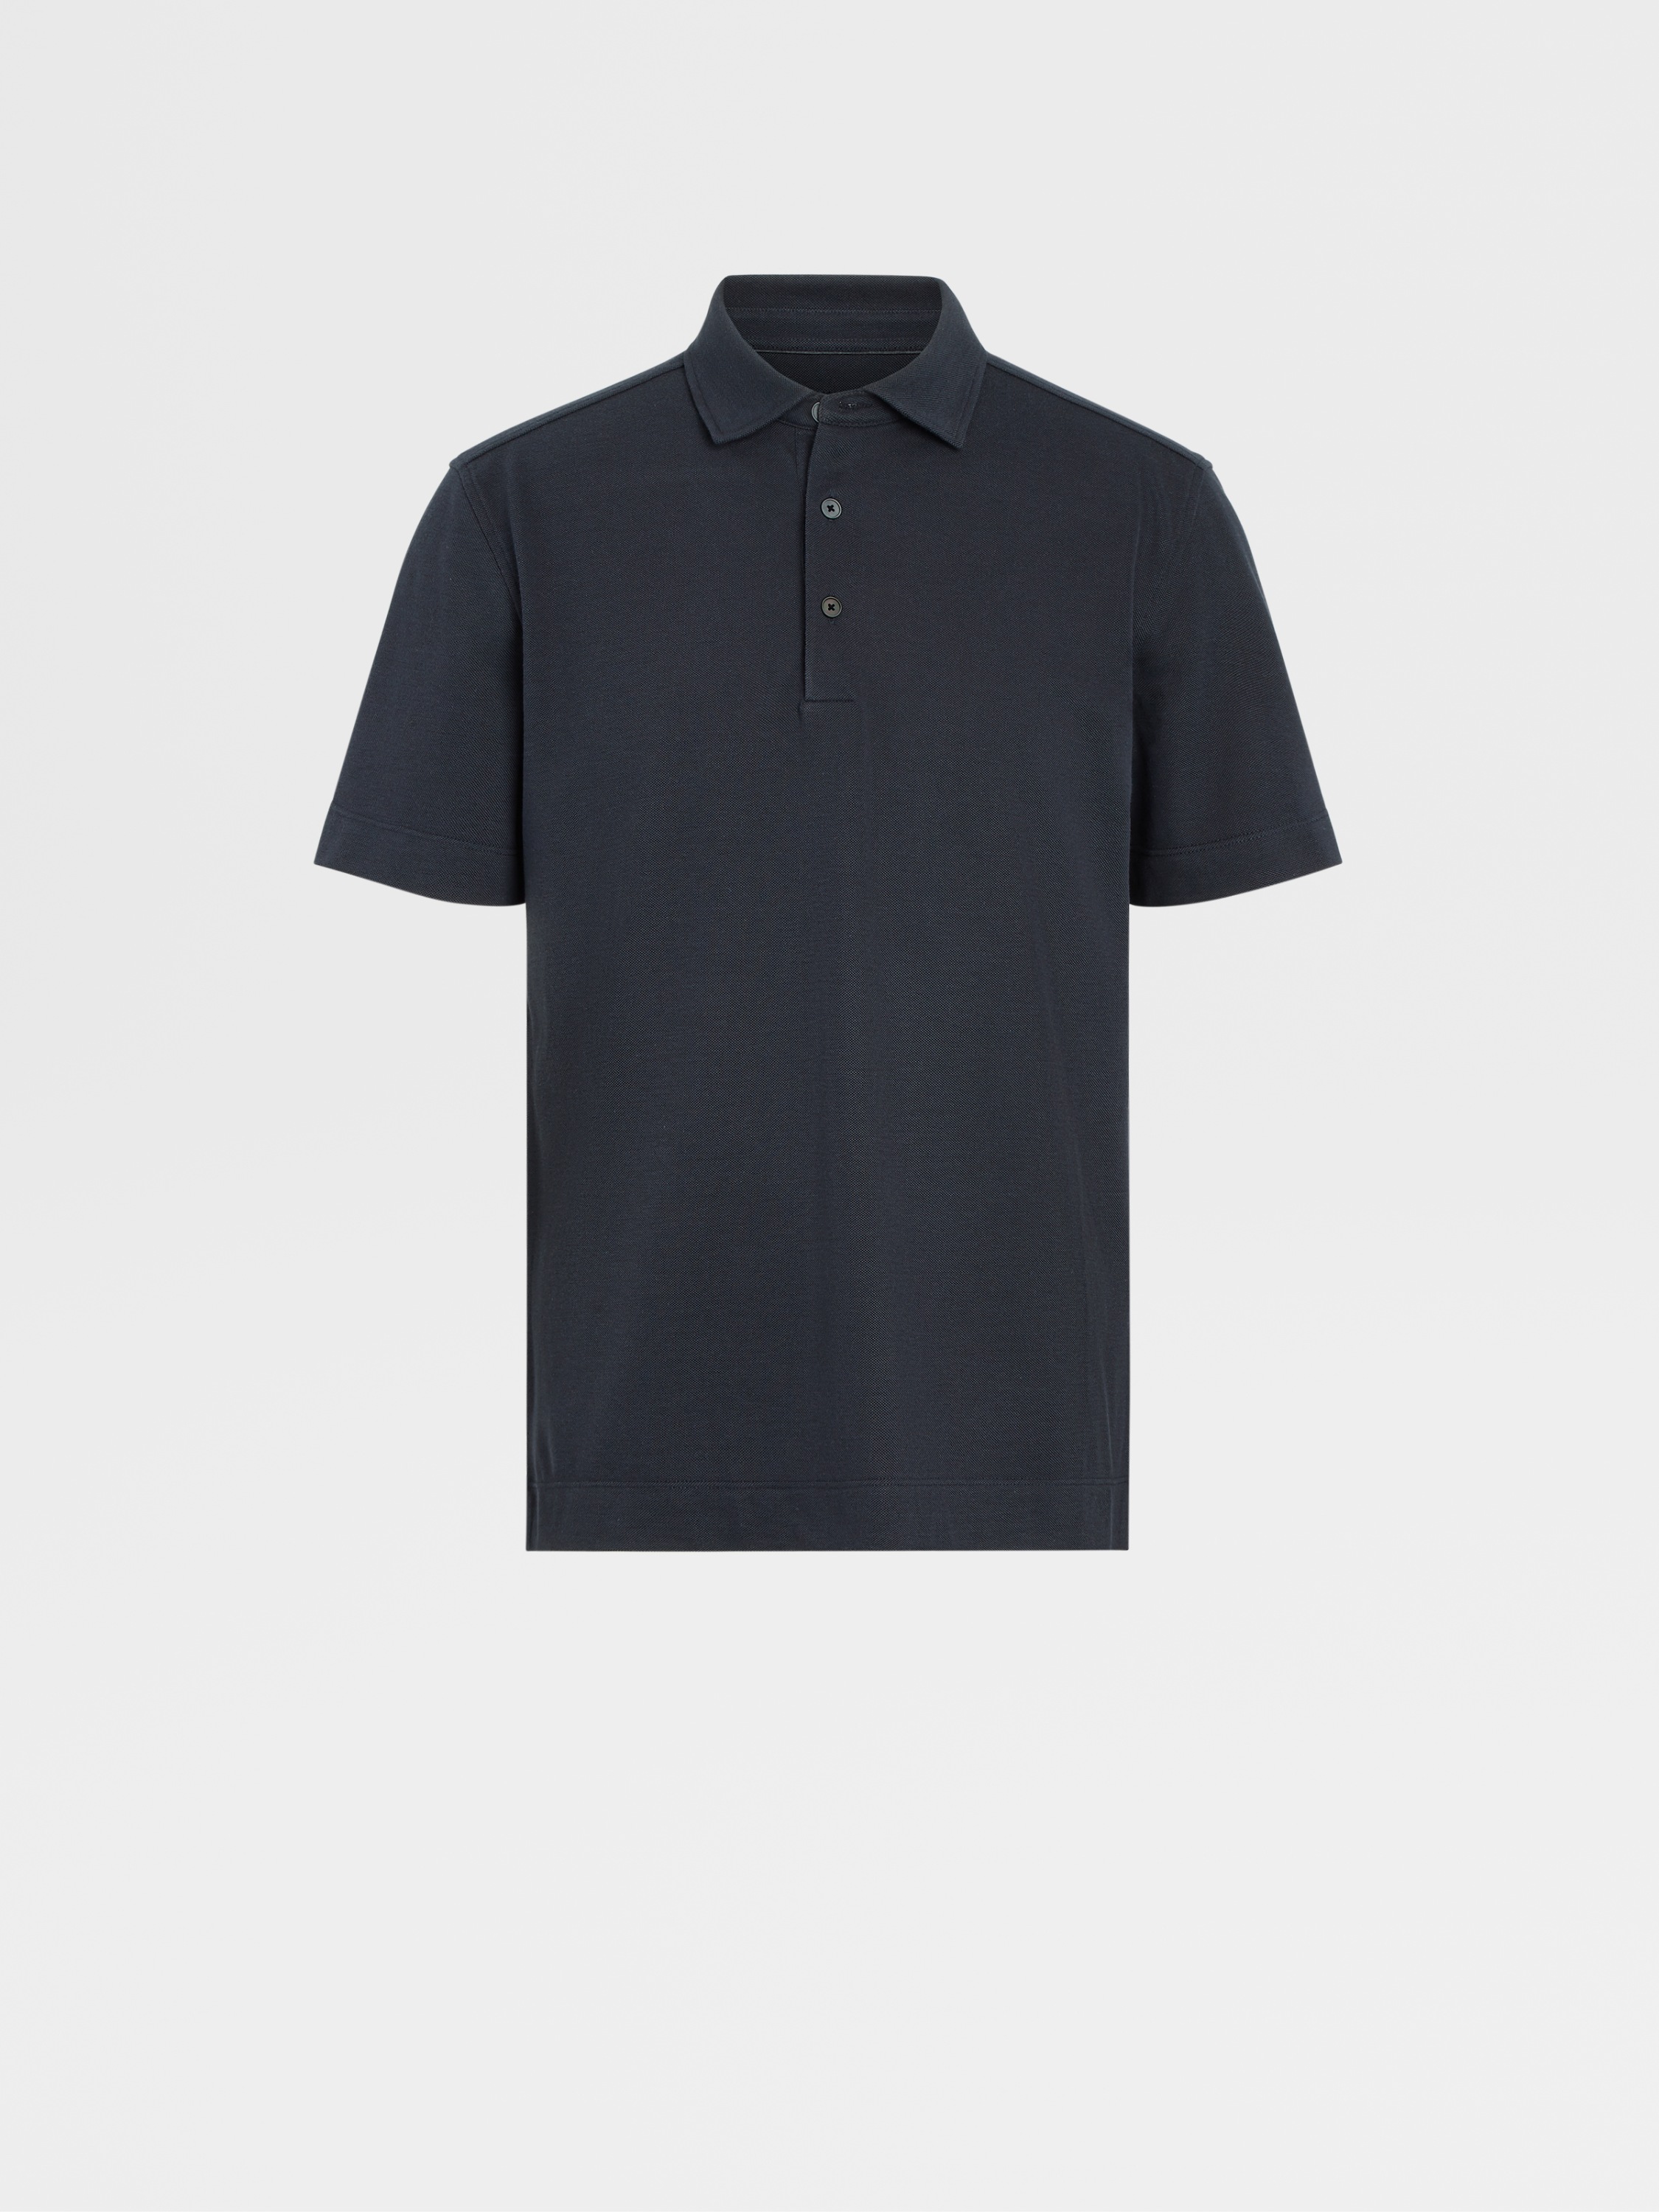 Navy Blue Cotton and Silk Polo Shirt FW23 27090564 | Zegna